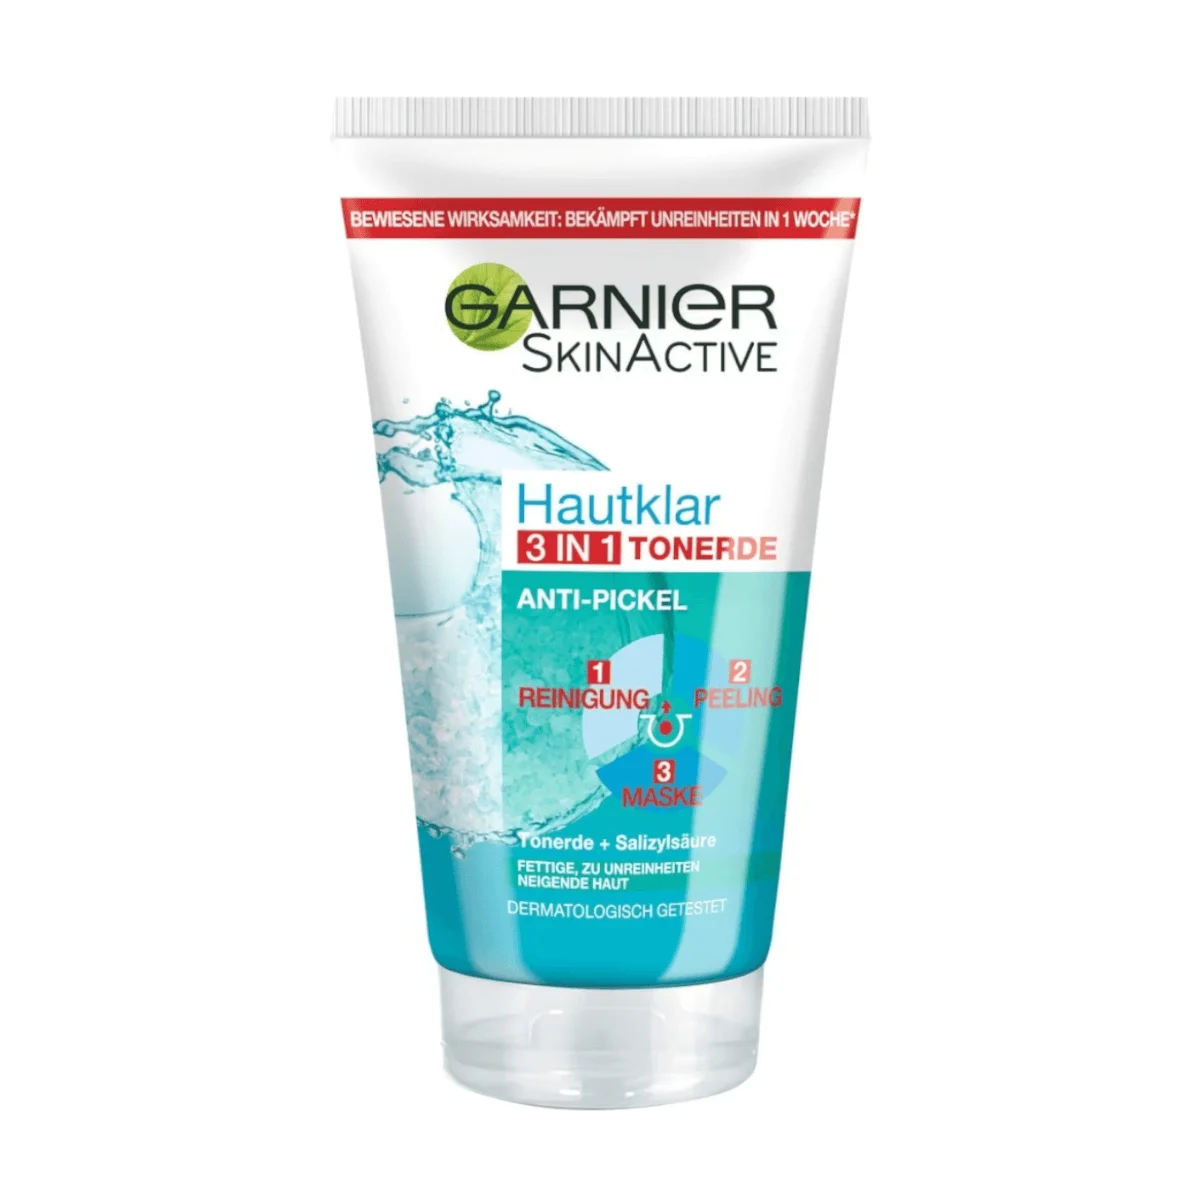 Garnier SkinActive Hautklar Reinigungscreme 3in1 Tonerde, 150 ml